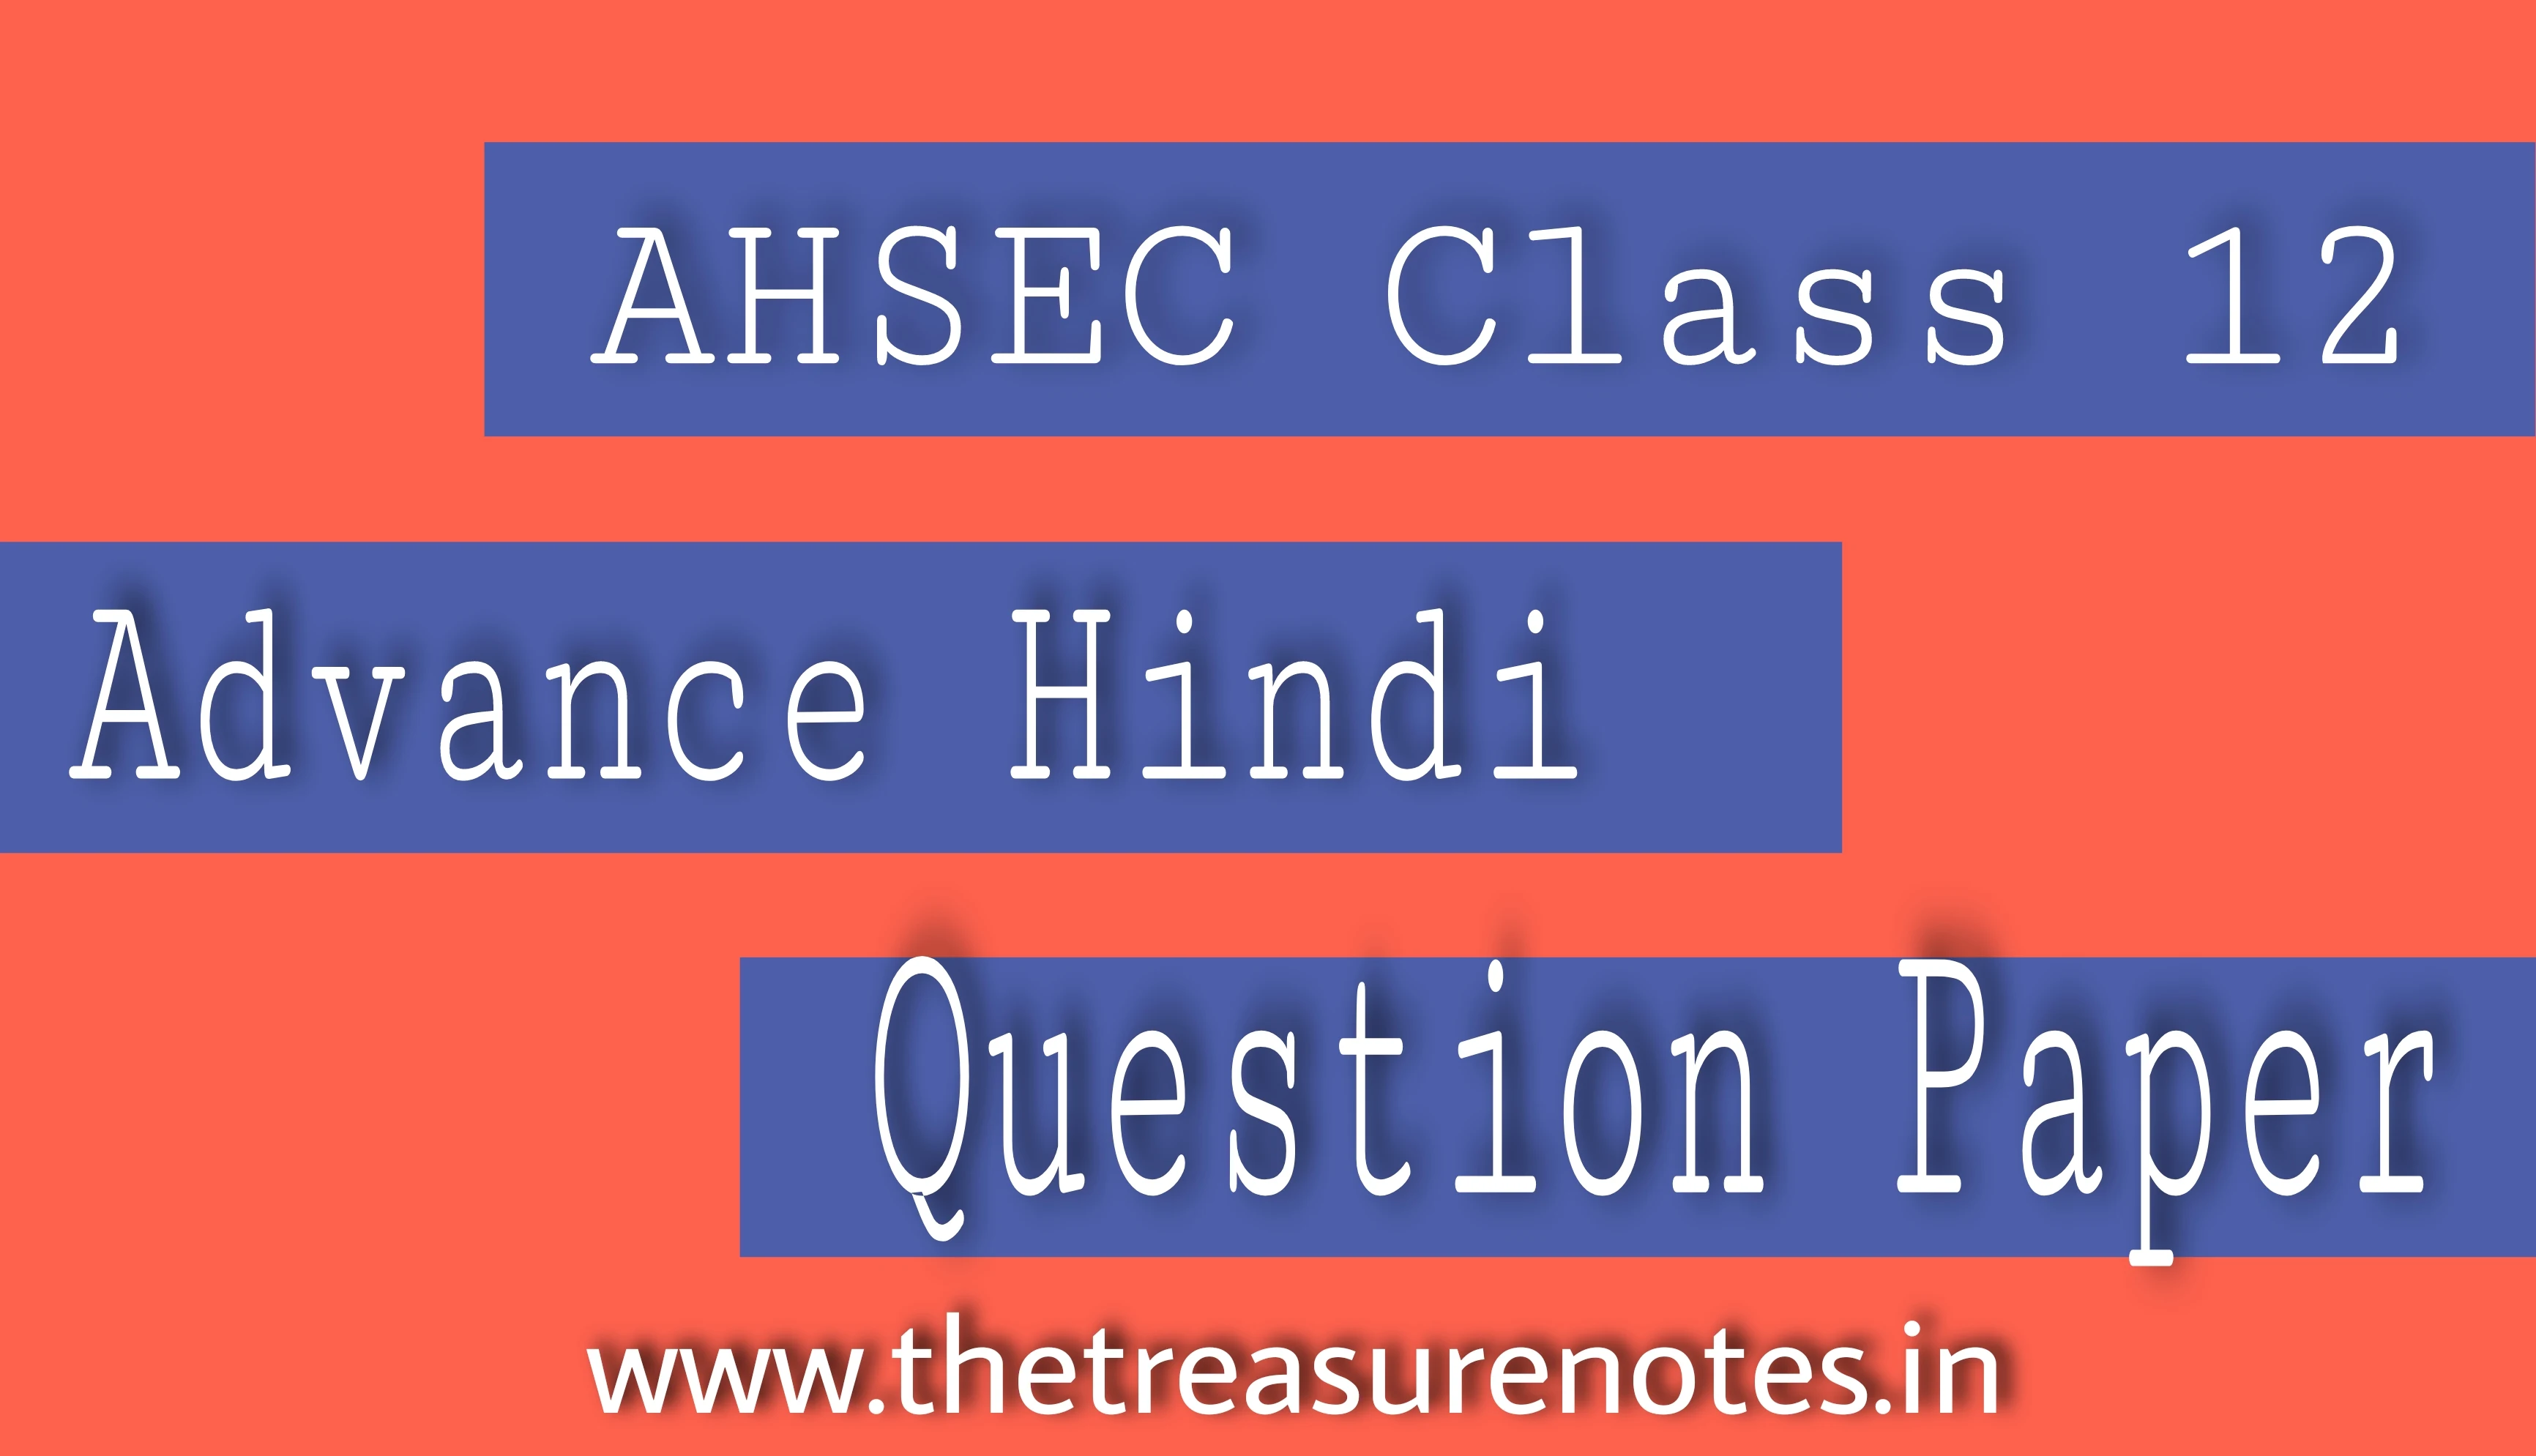 AHSEC CLASS 12 Advance Hindi Question Paper' 2017 | HS 2nd Year Adv. Hindi Question Paper'2017